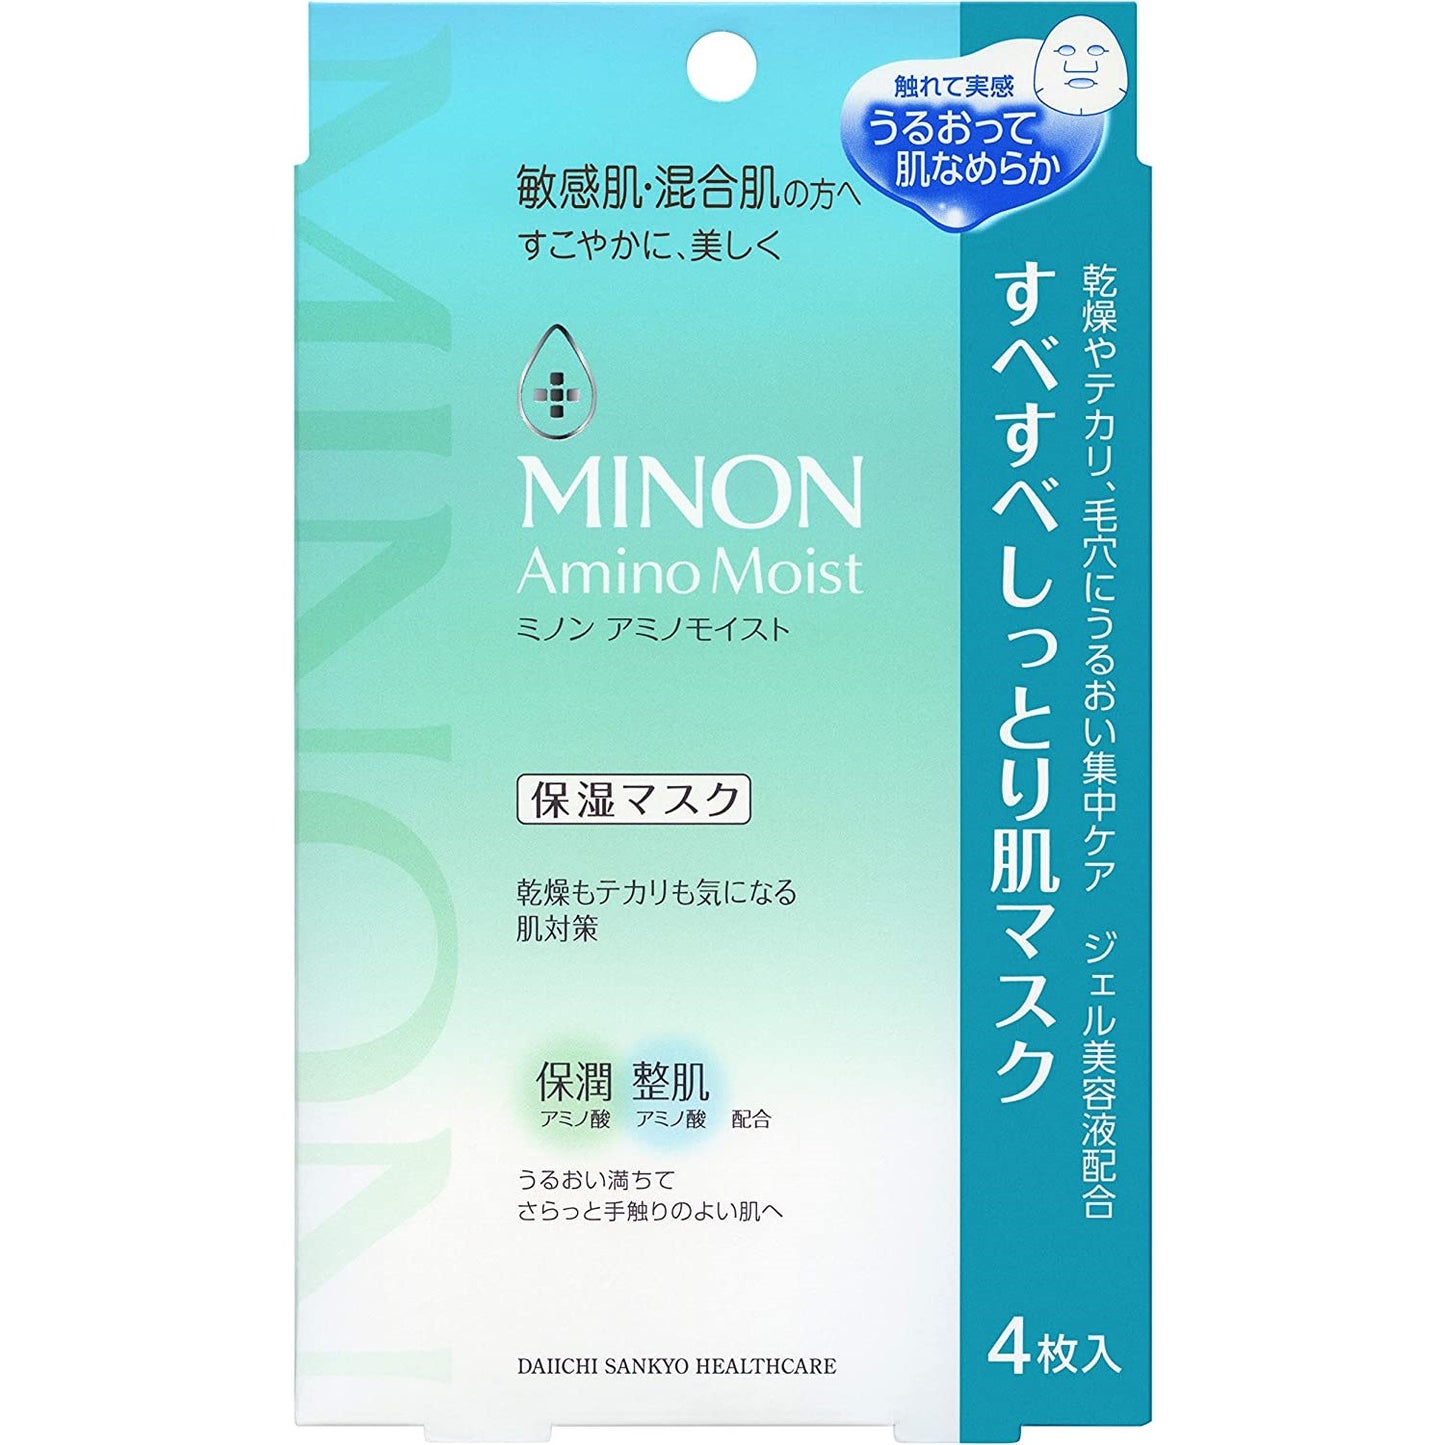 MINON Amino Moist Smooth & Moist Skin Mask 22ml 4pcs (Made in Japan)